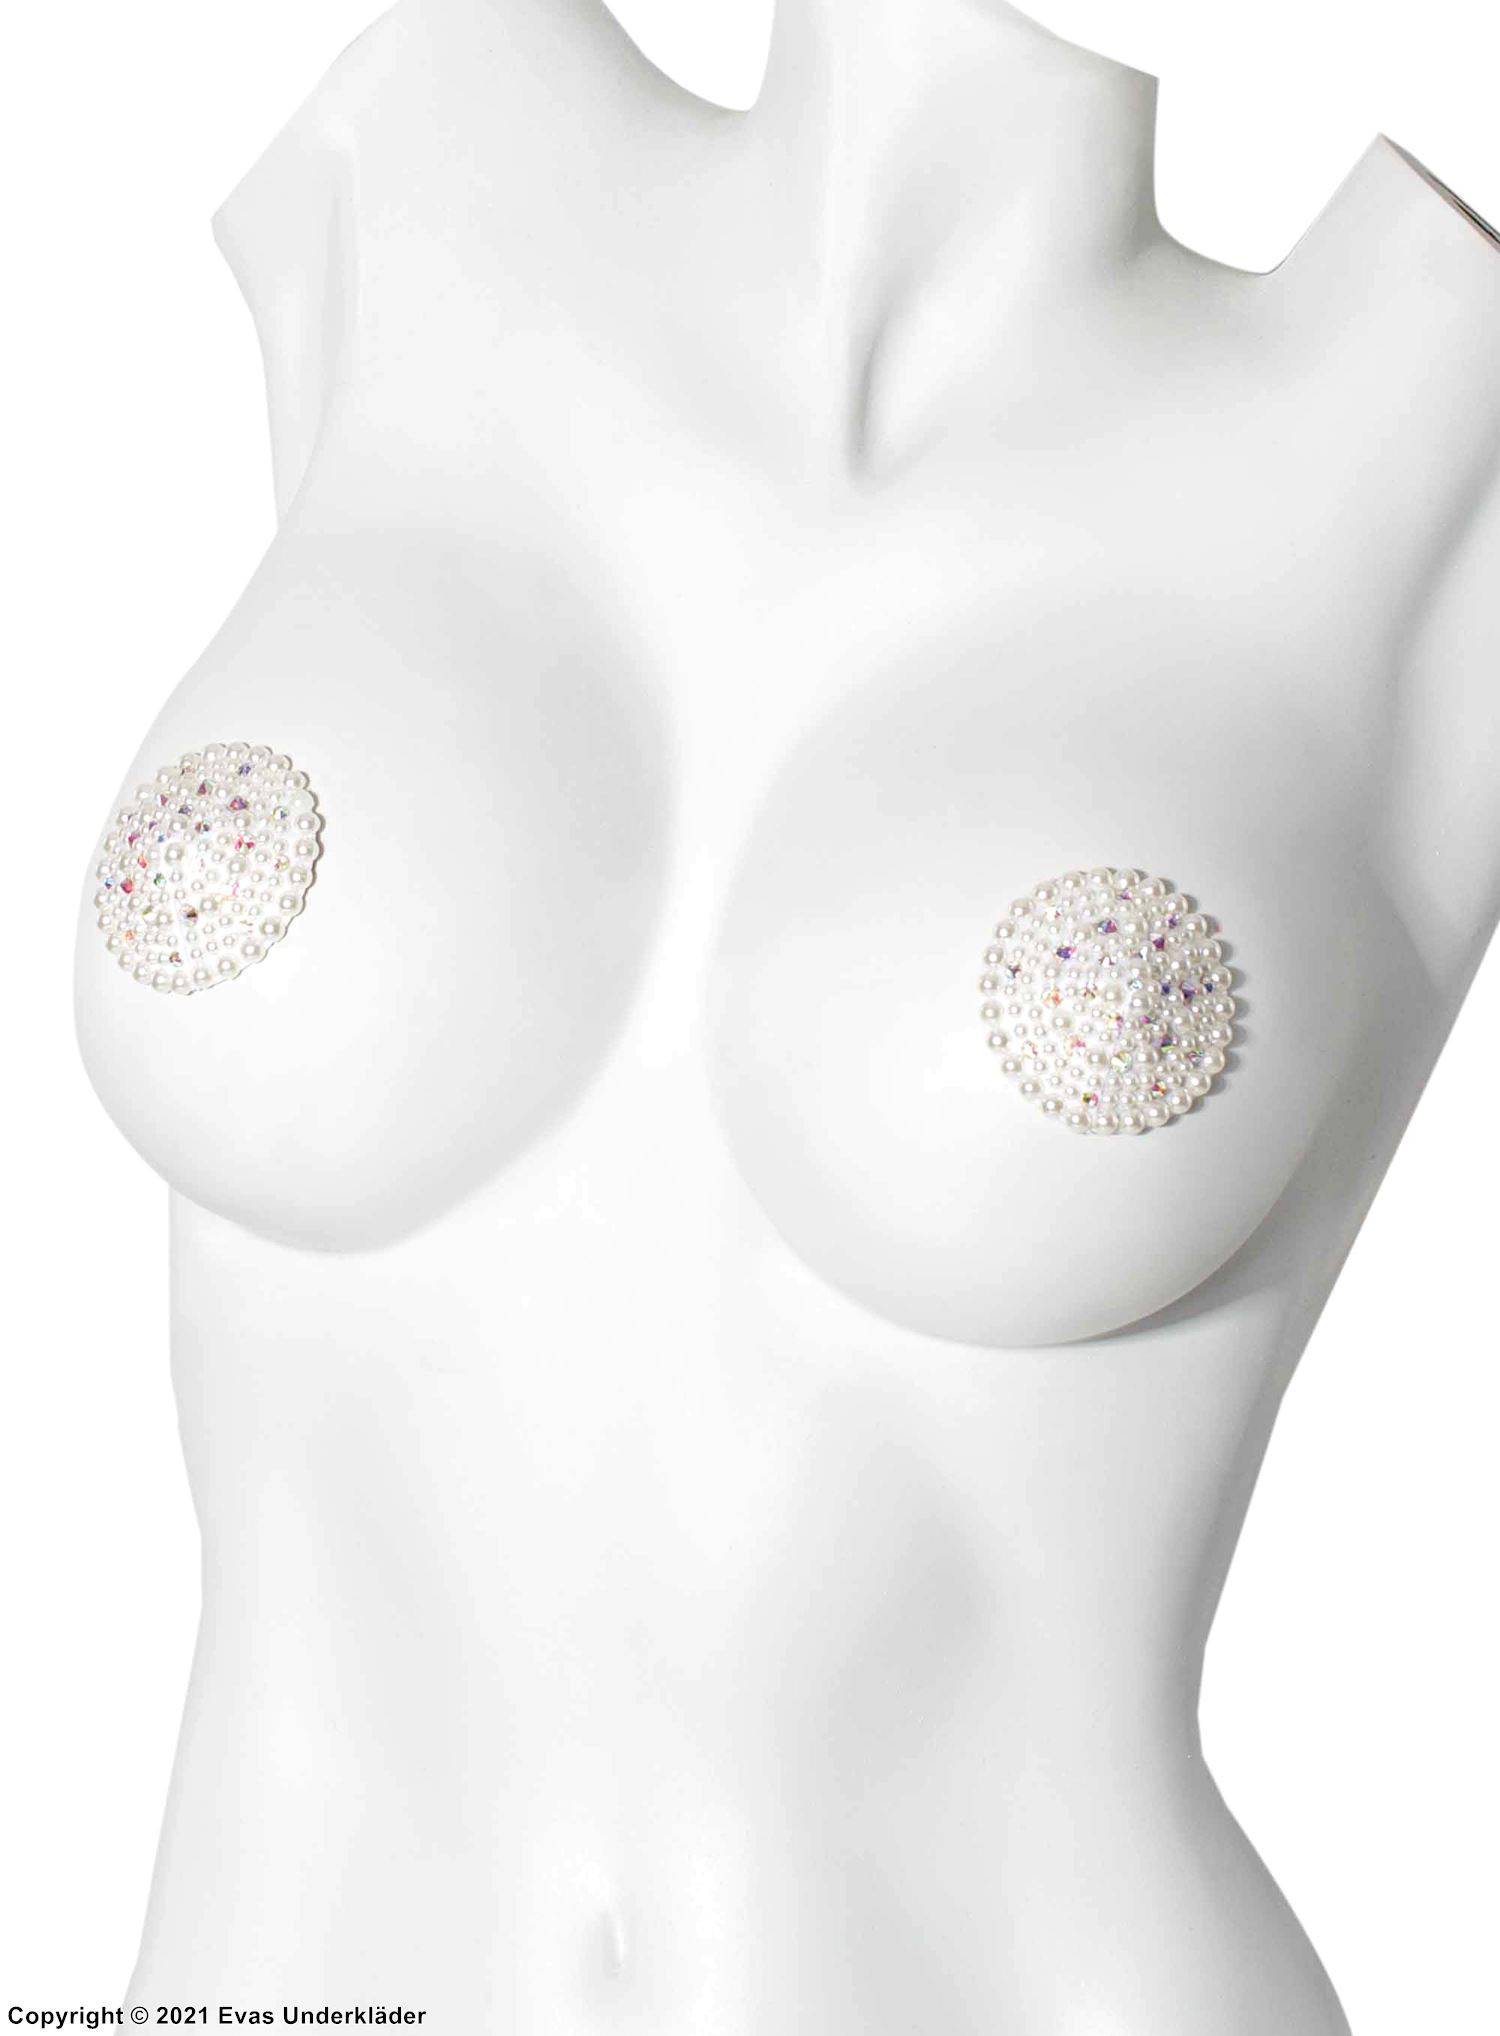 Selbstklebende Brustwarzenabdeckung, Perlen